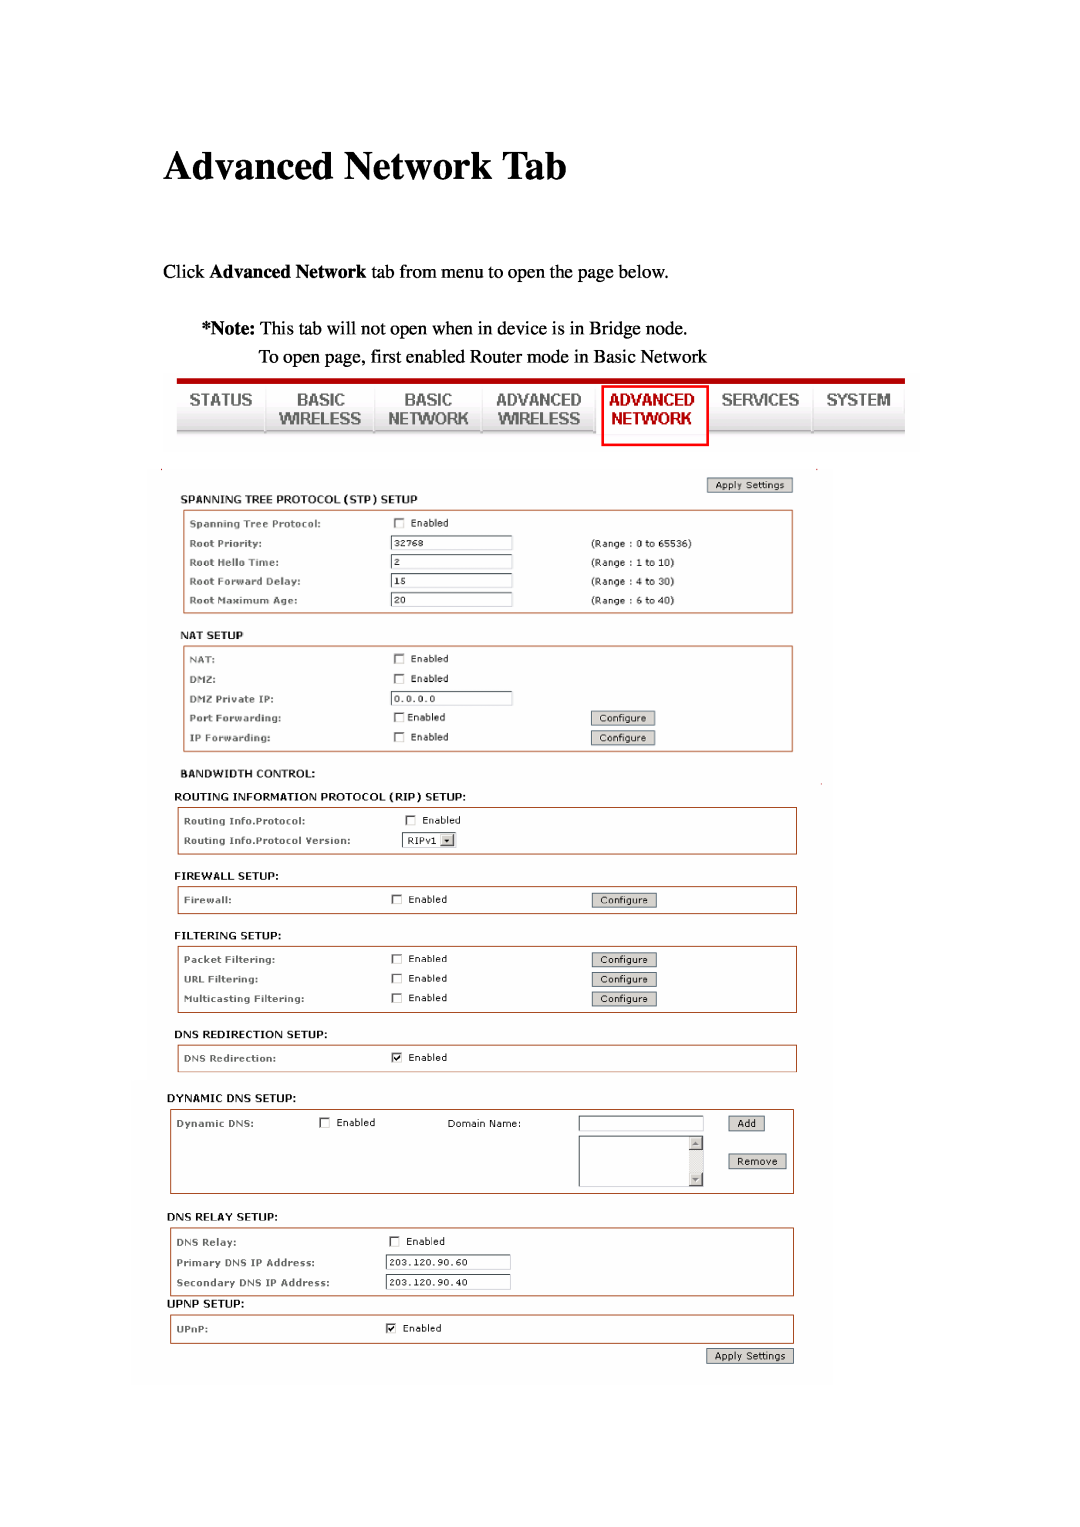 Compex Systems 802.11N manual Advanced Network Tab, Click Advanced Network tab from menu to open the page below 